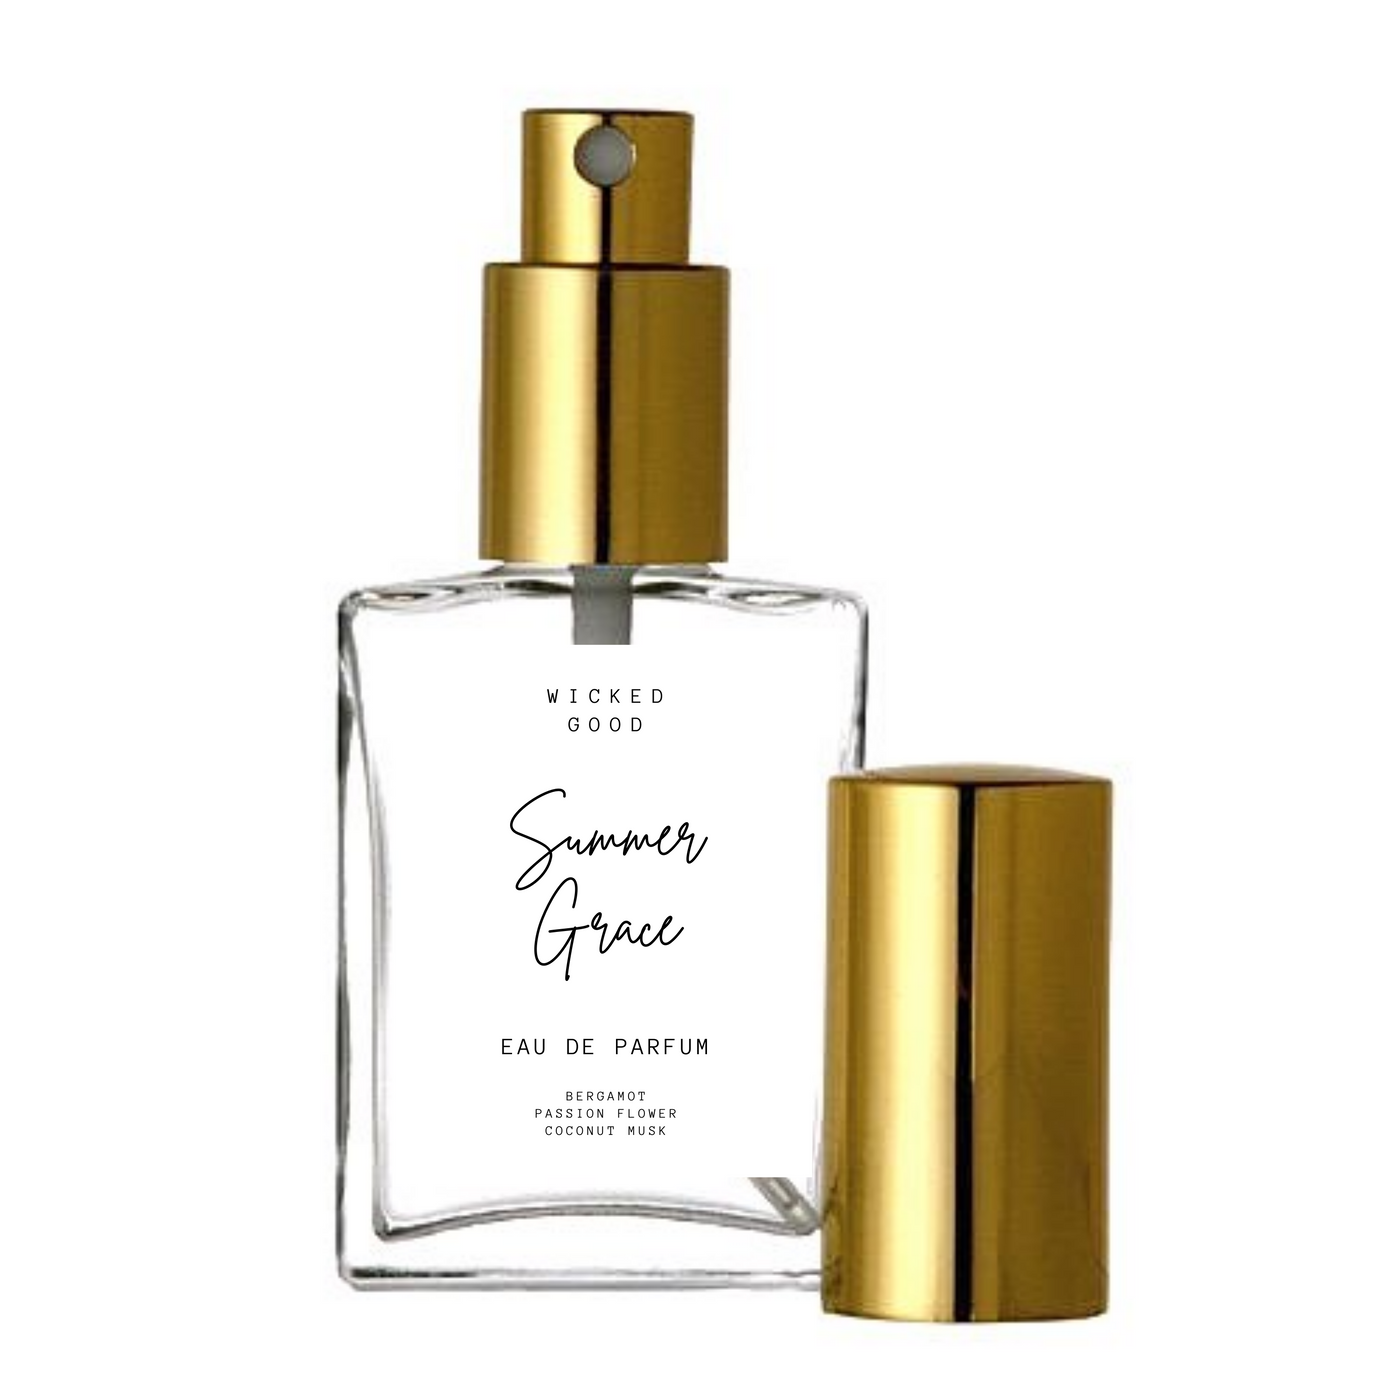 Summer Grace Perfume Philosophy Type | Wicked Good Fragrance